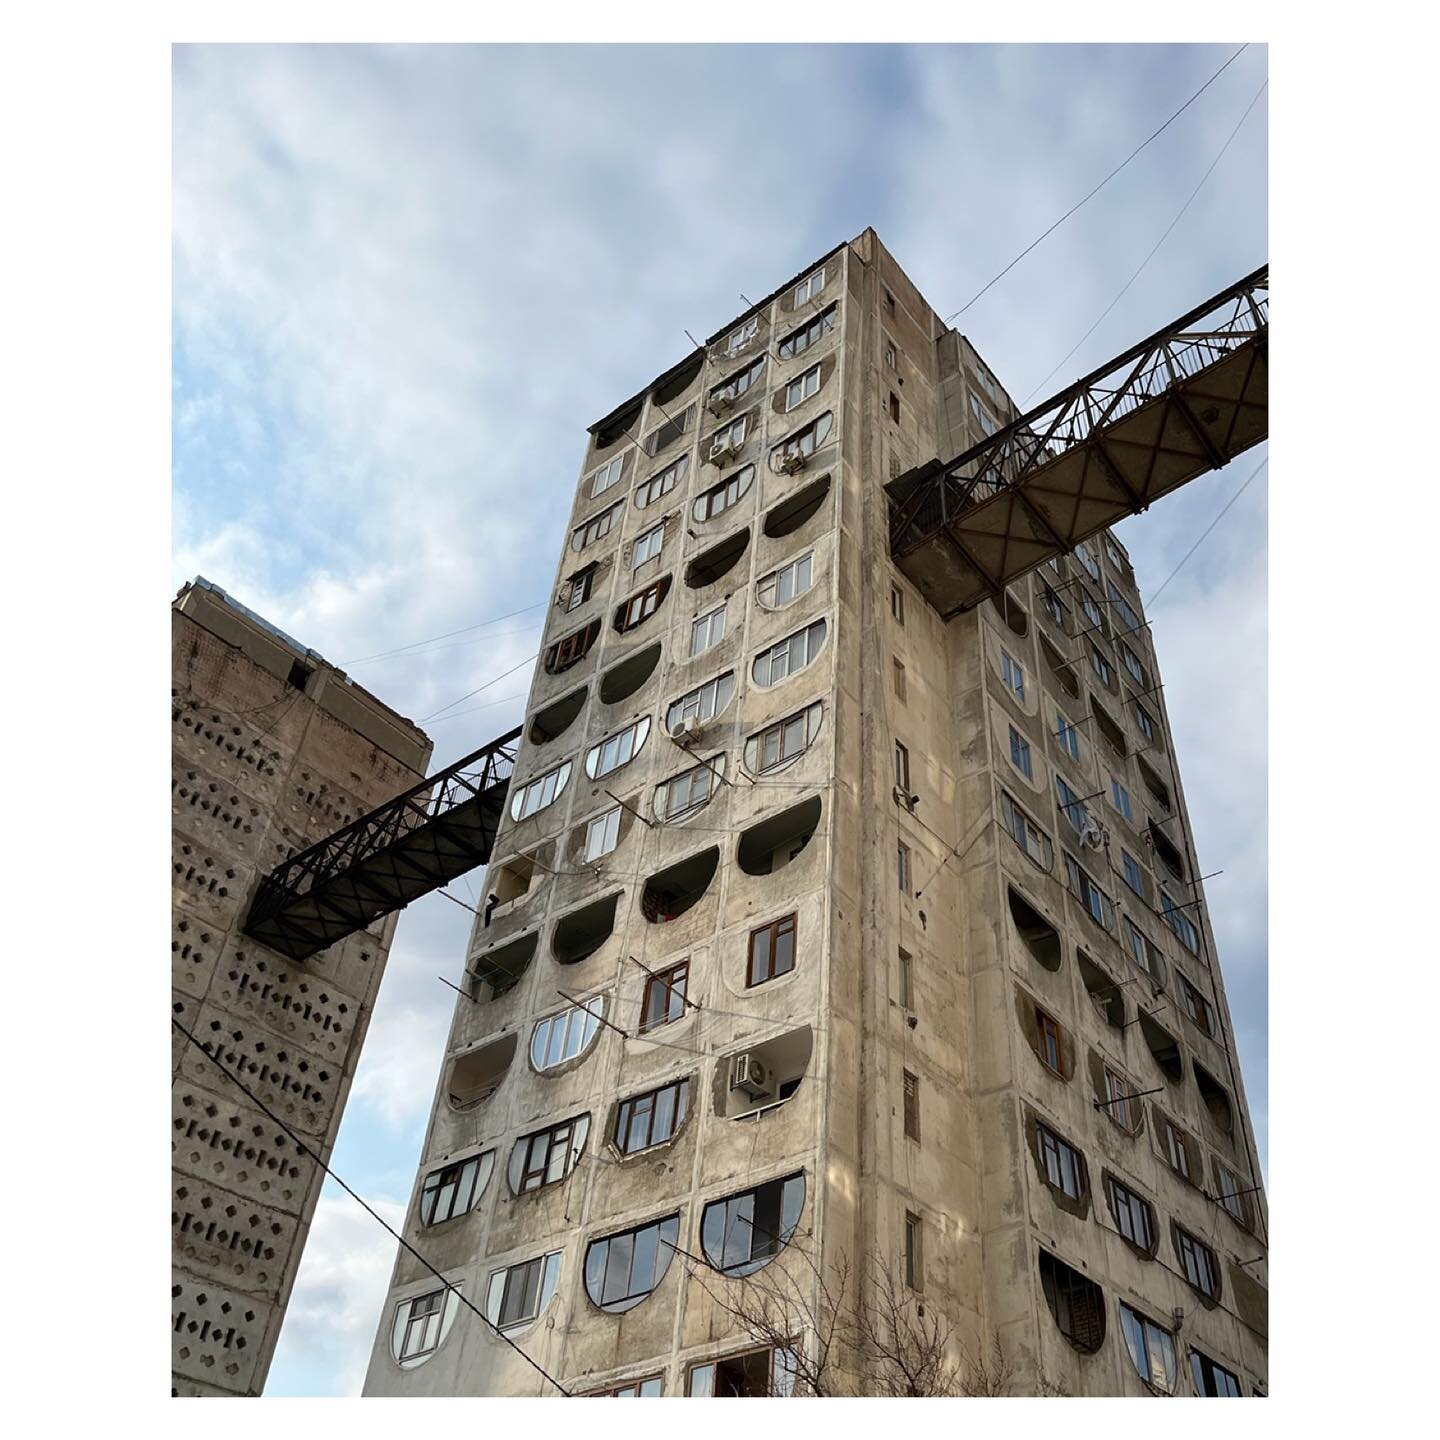 Sakartvelo III: Nutsubidze Skybridge

#sakartvelo #georgia #tbilisi #brutalism #brutalistarchitecture #sovietarchitecture #architecturalphotography #travelphotography #architectureheritage